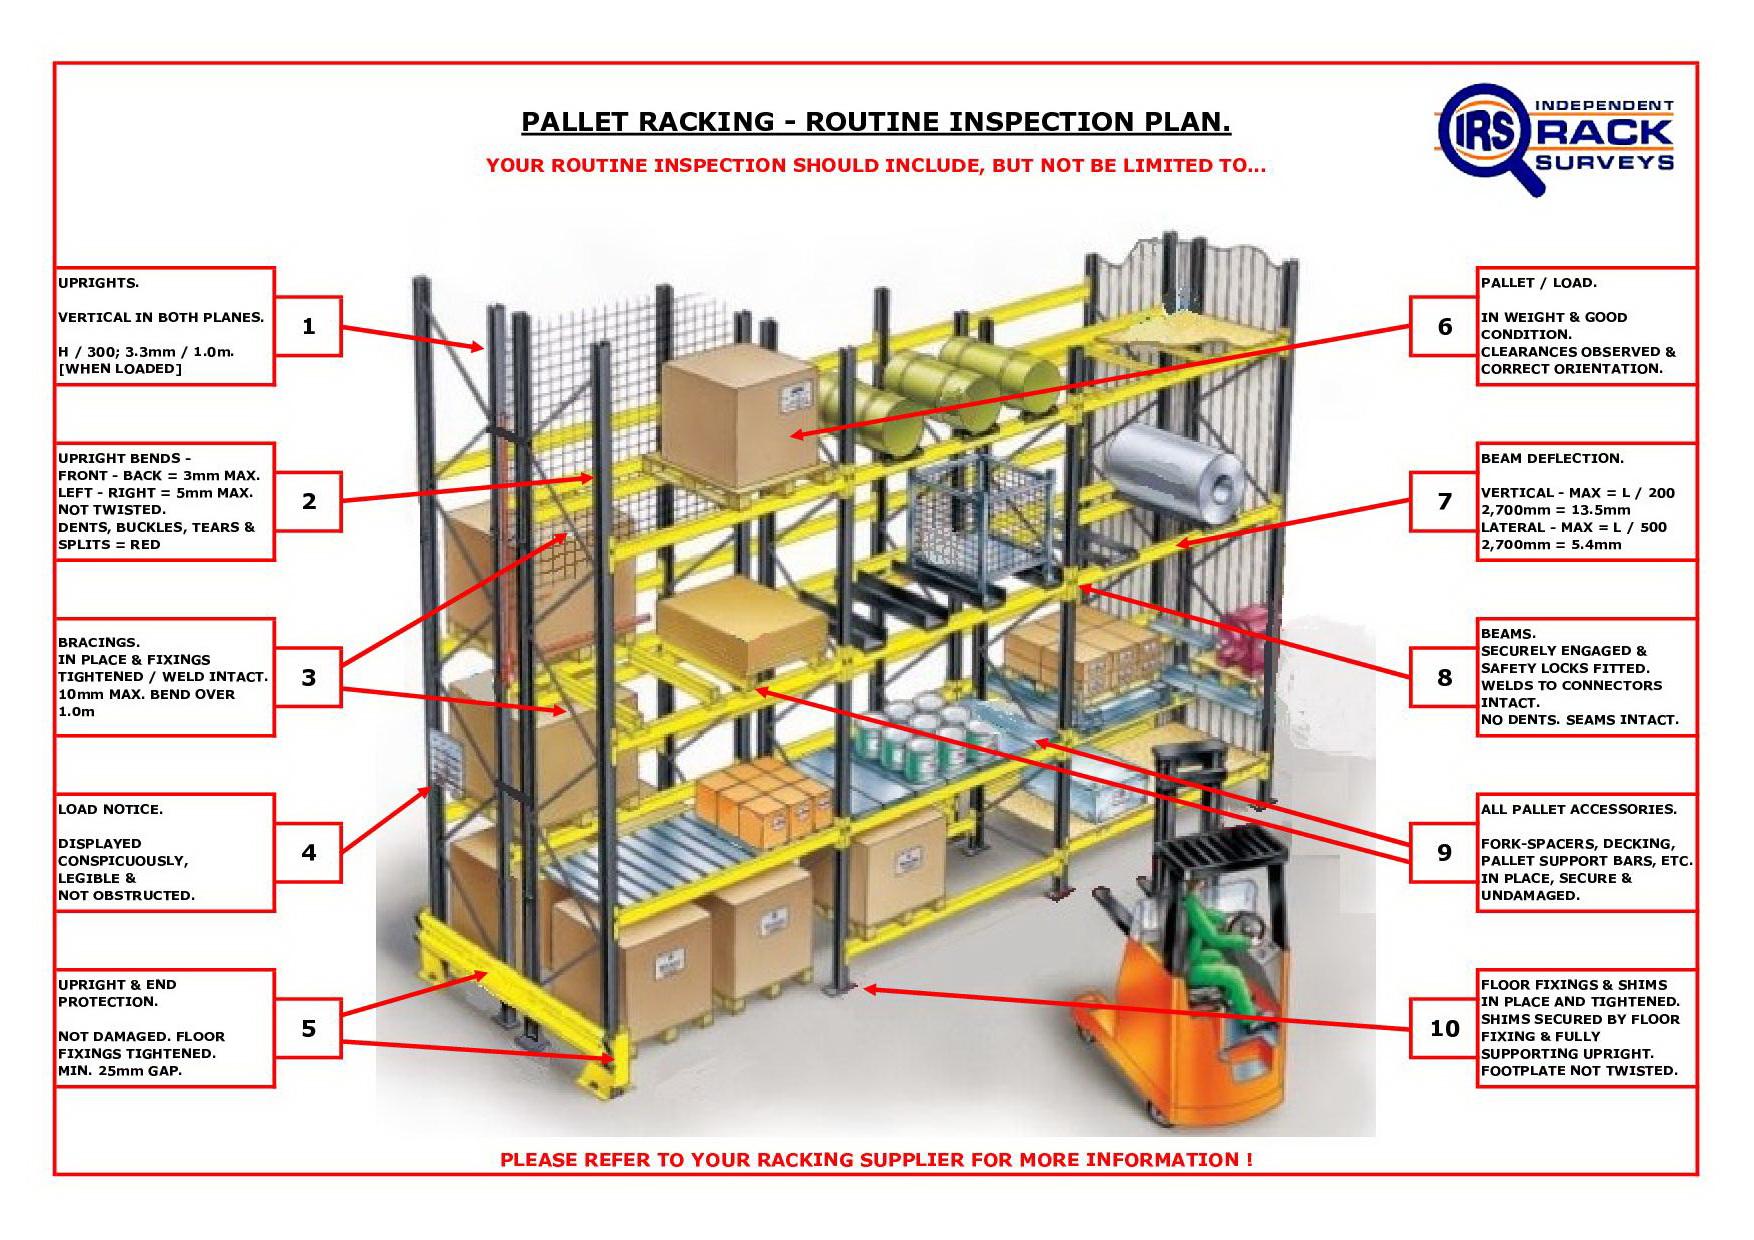 04 - Pallet Racking Routine Inspection Plan.